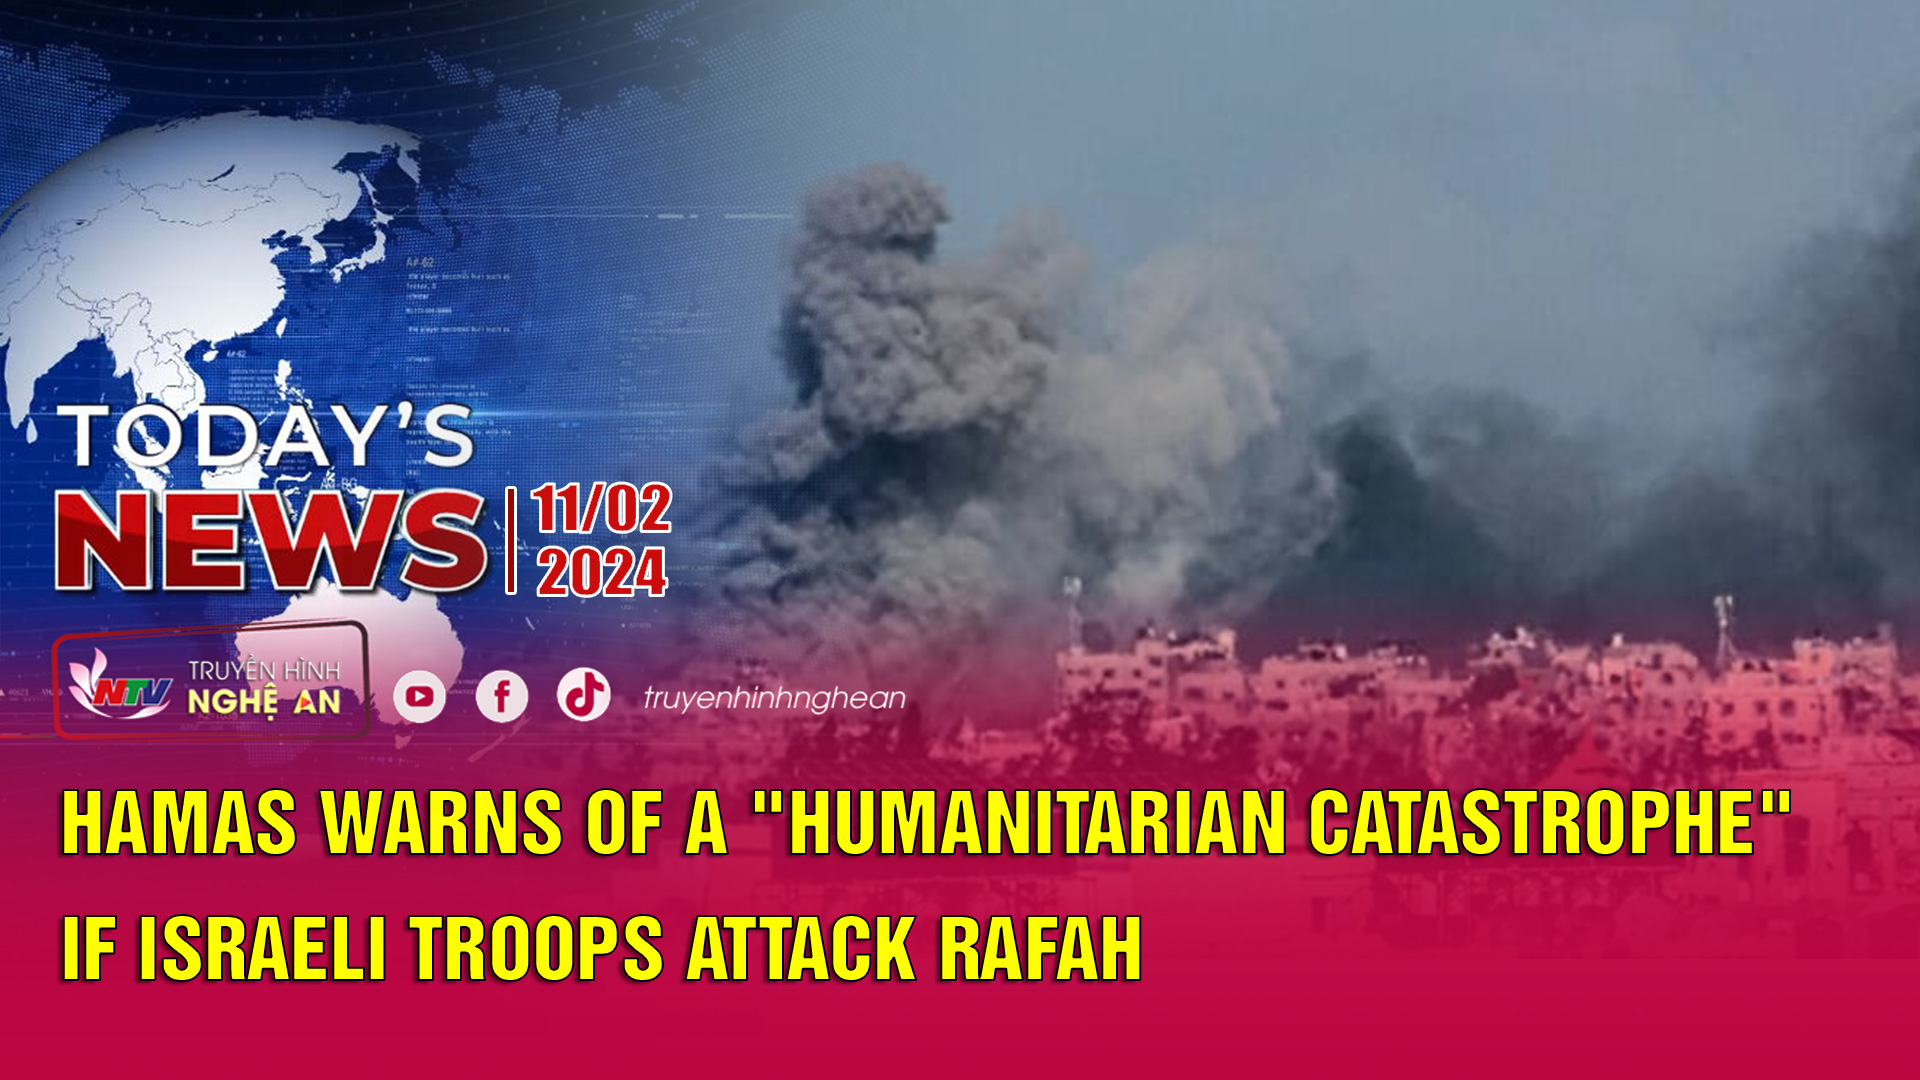 Today's News - 11/2/2024: Hamas warns of a "humanitarian catastrophe" if Israeli troops attack Rafah